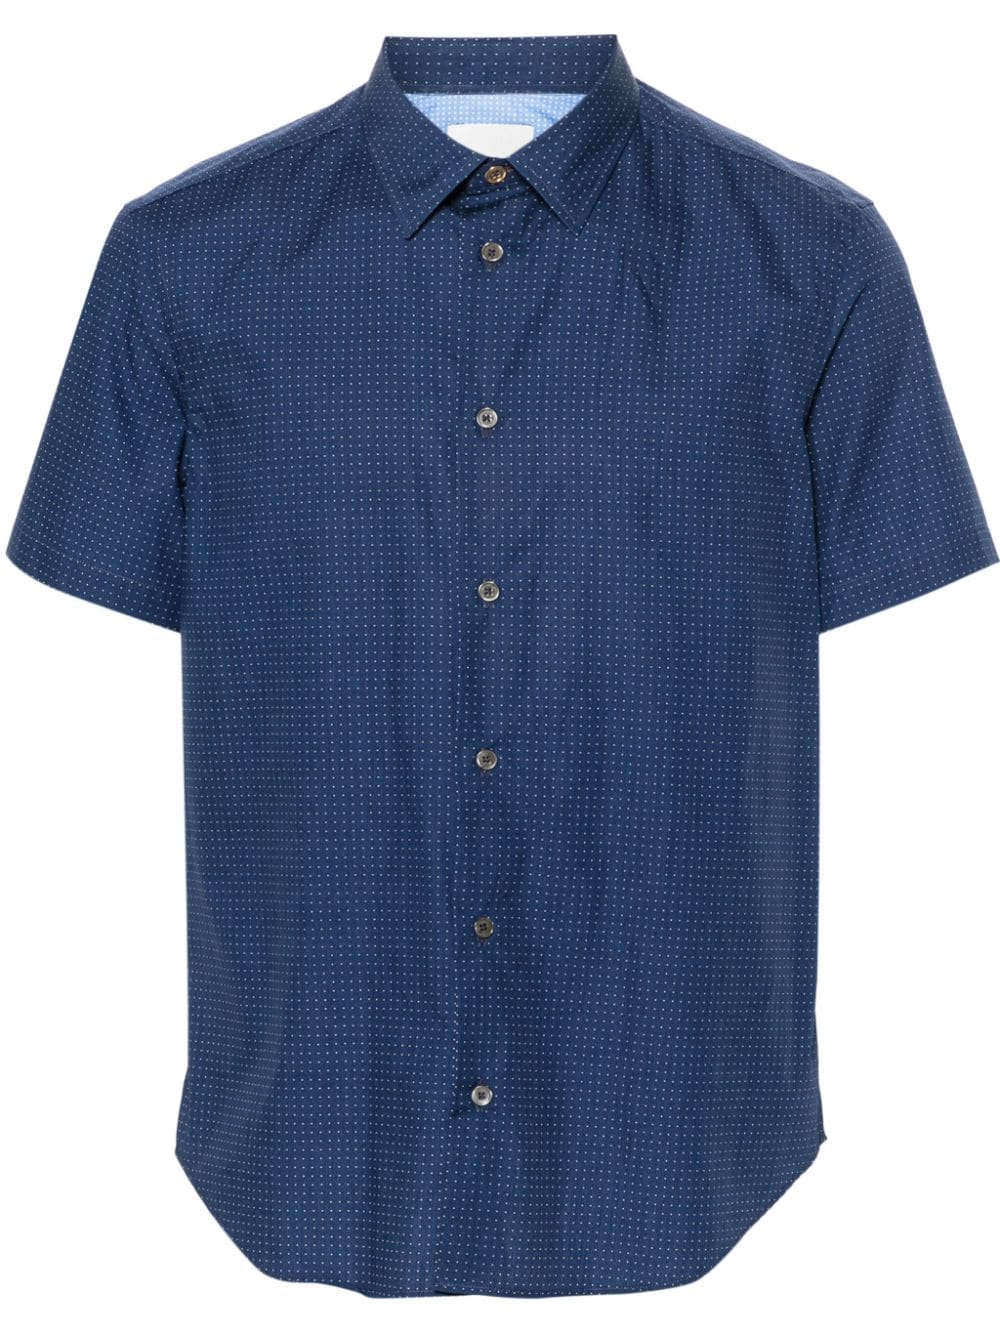 Paul Smith polka dot cotton shirt - Blue von Paul Smith